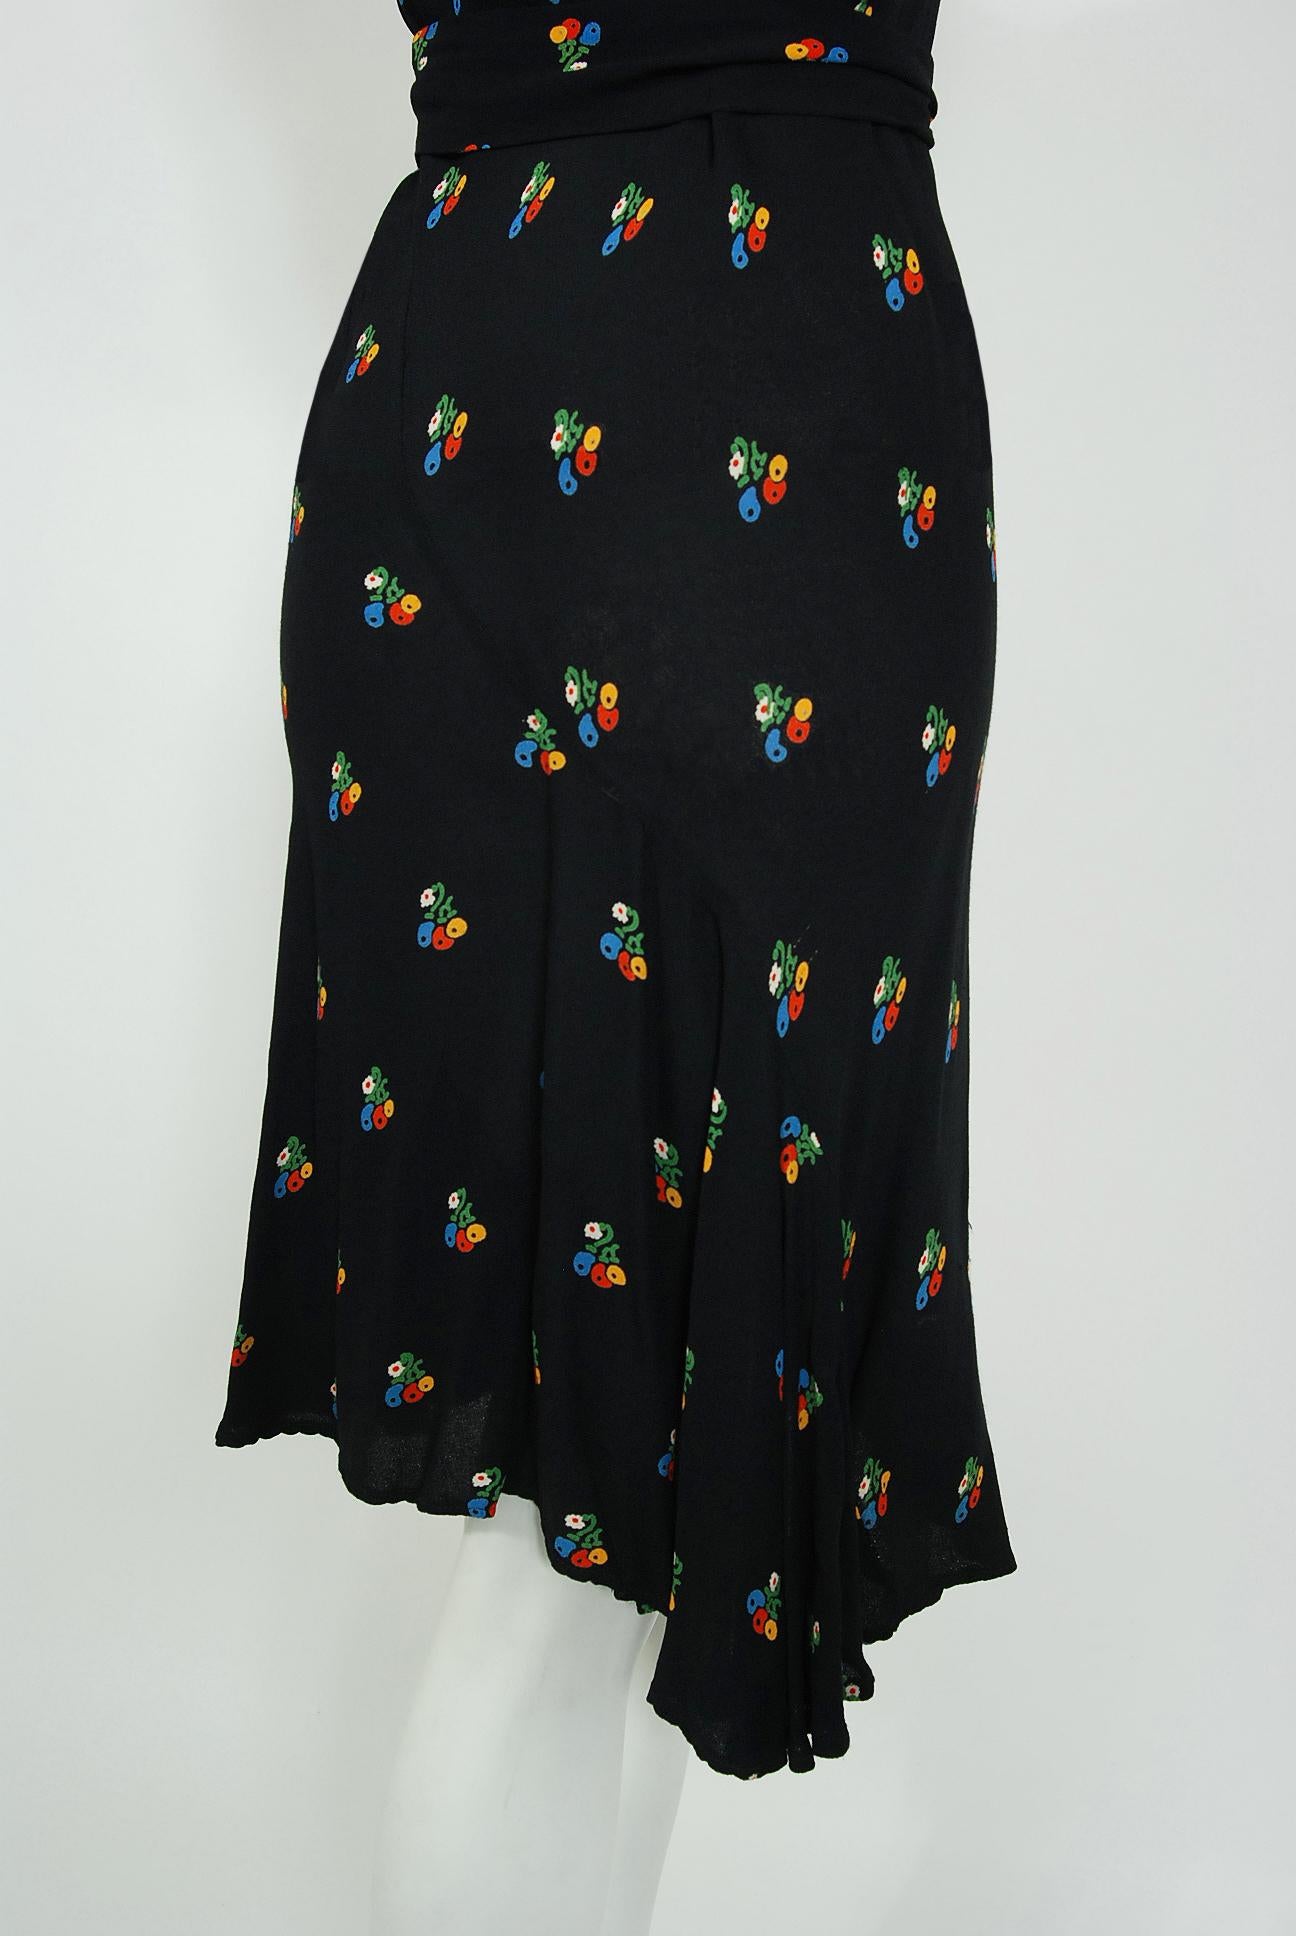 Vintage 1971 Ossie Clark Black Floral Celia Birtwell Print Silk Bias-Cut Dress  1